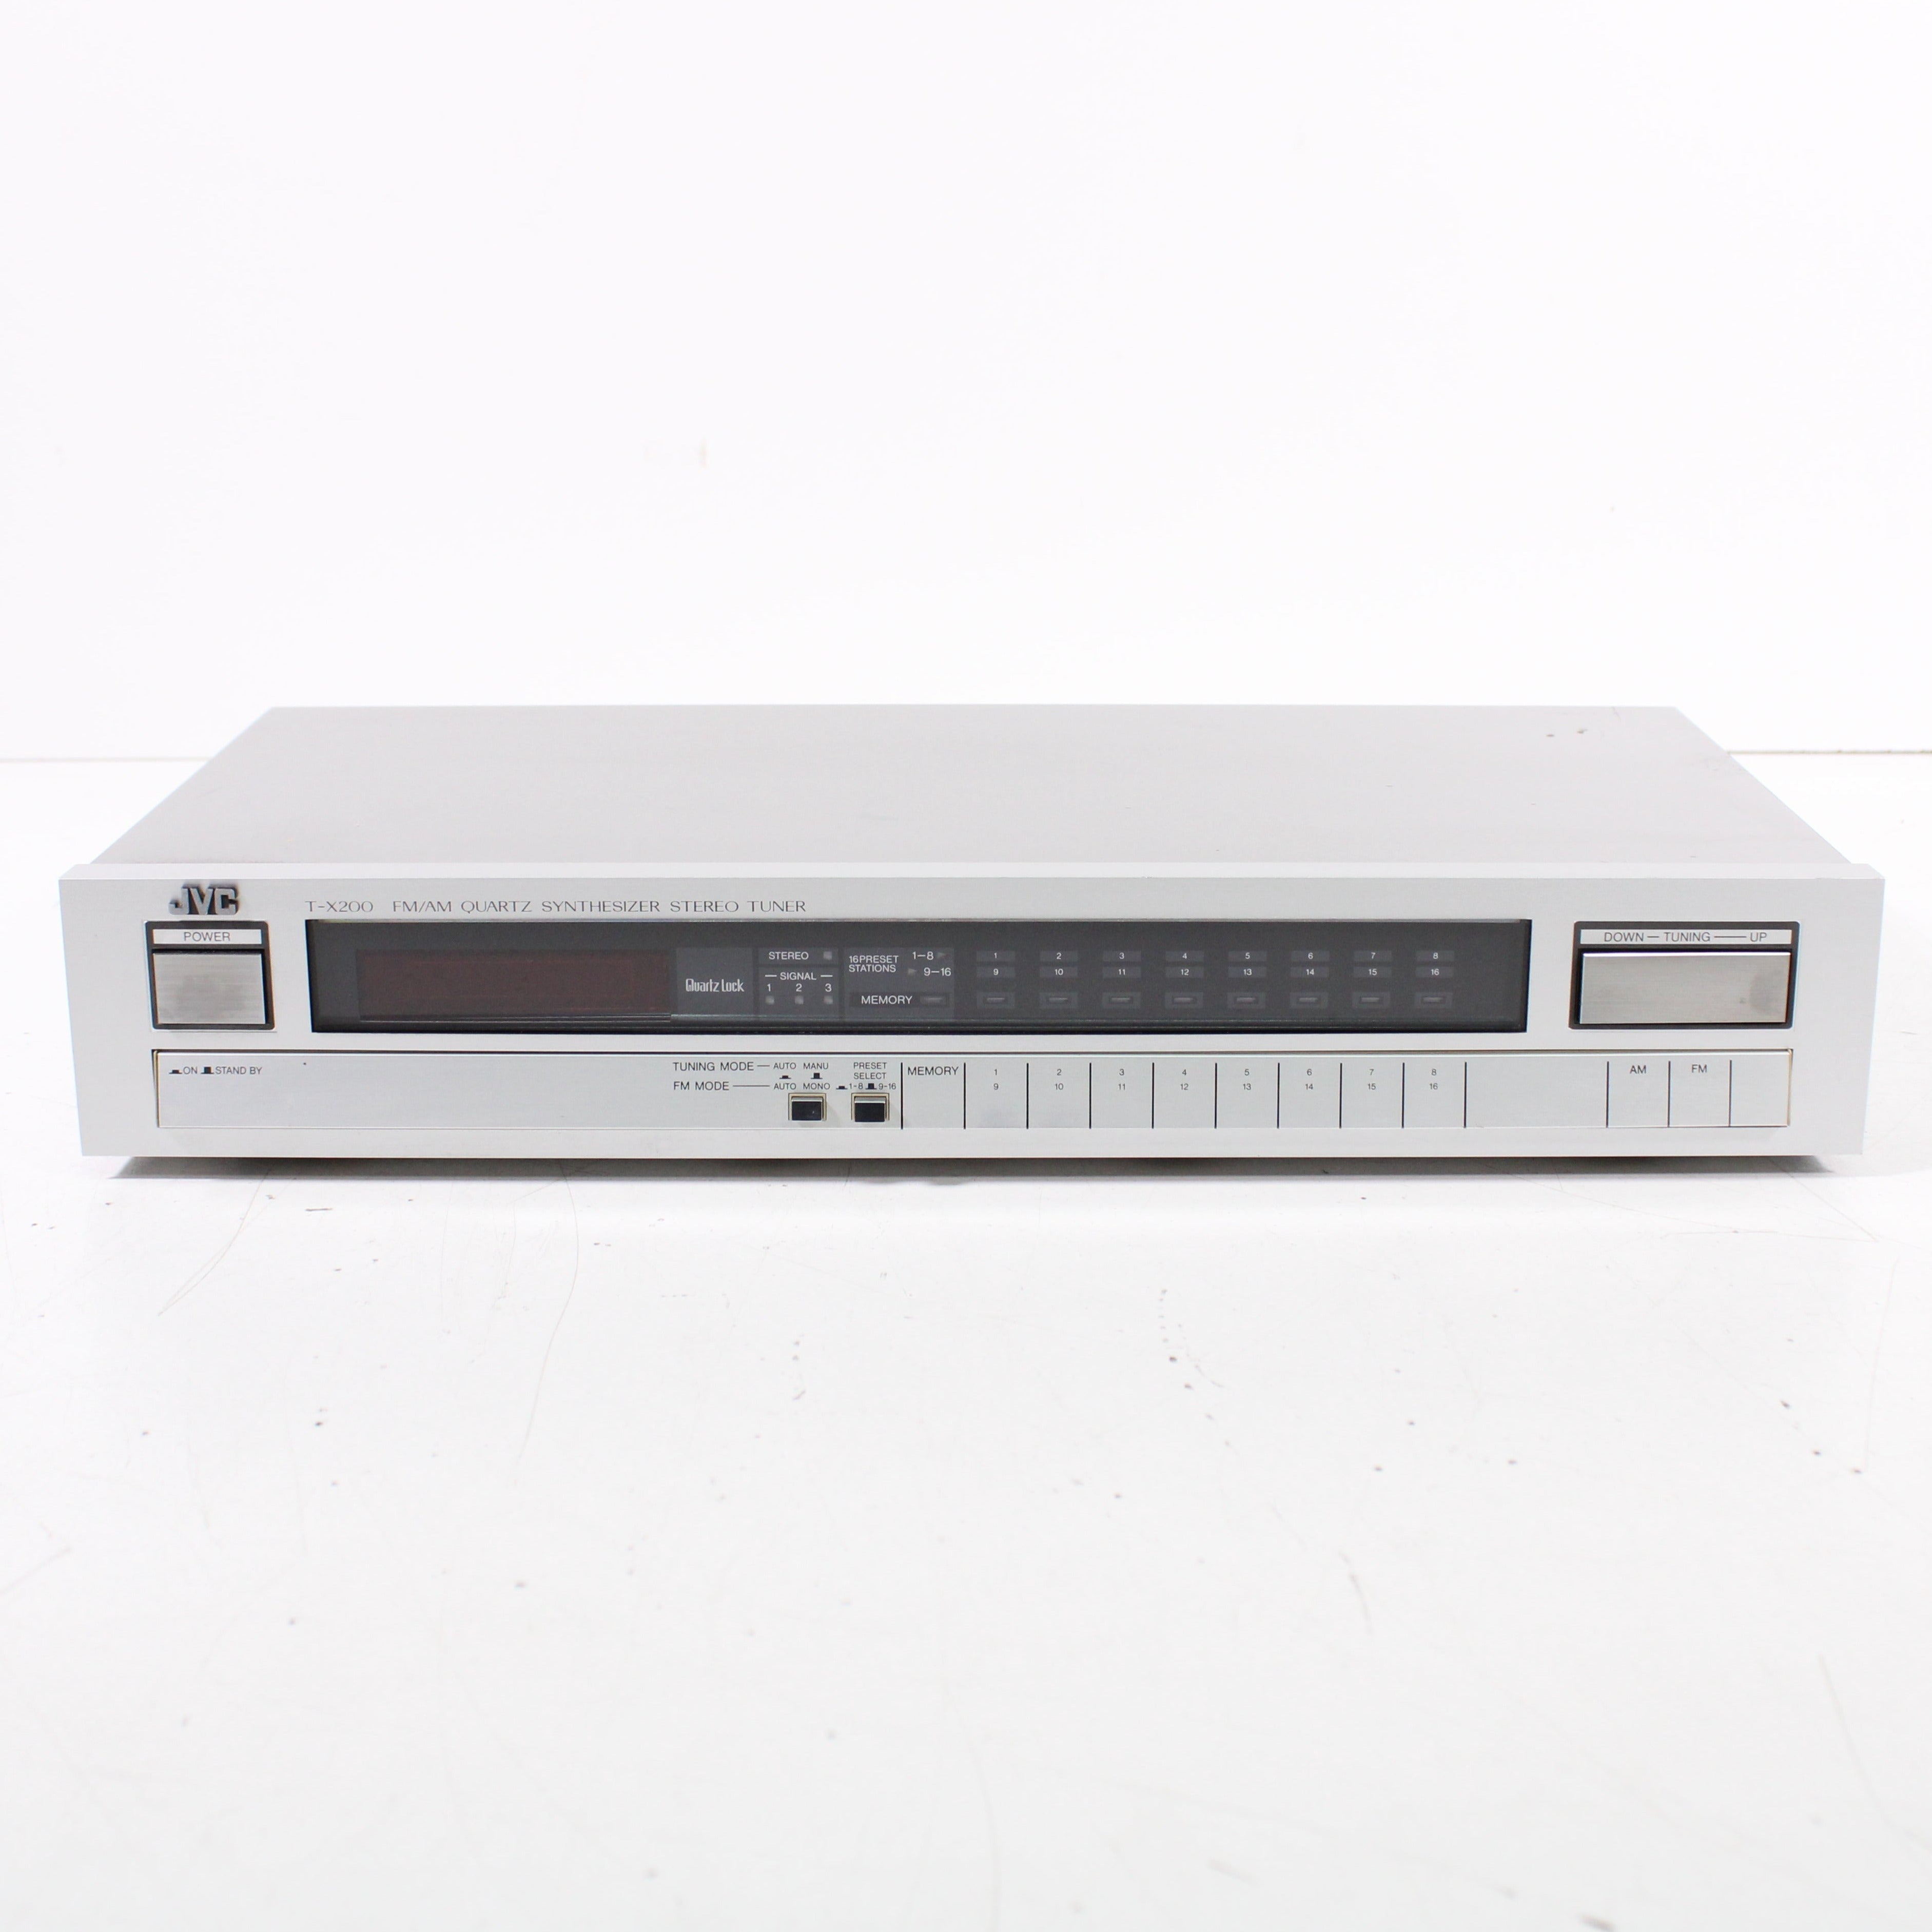 JVC T-X200 FM AM Quartz Synthesizer Stereo Tuner Silver (1983)